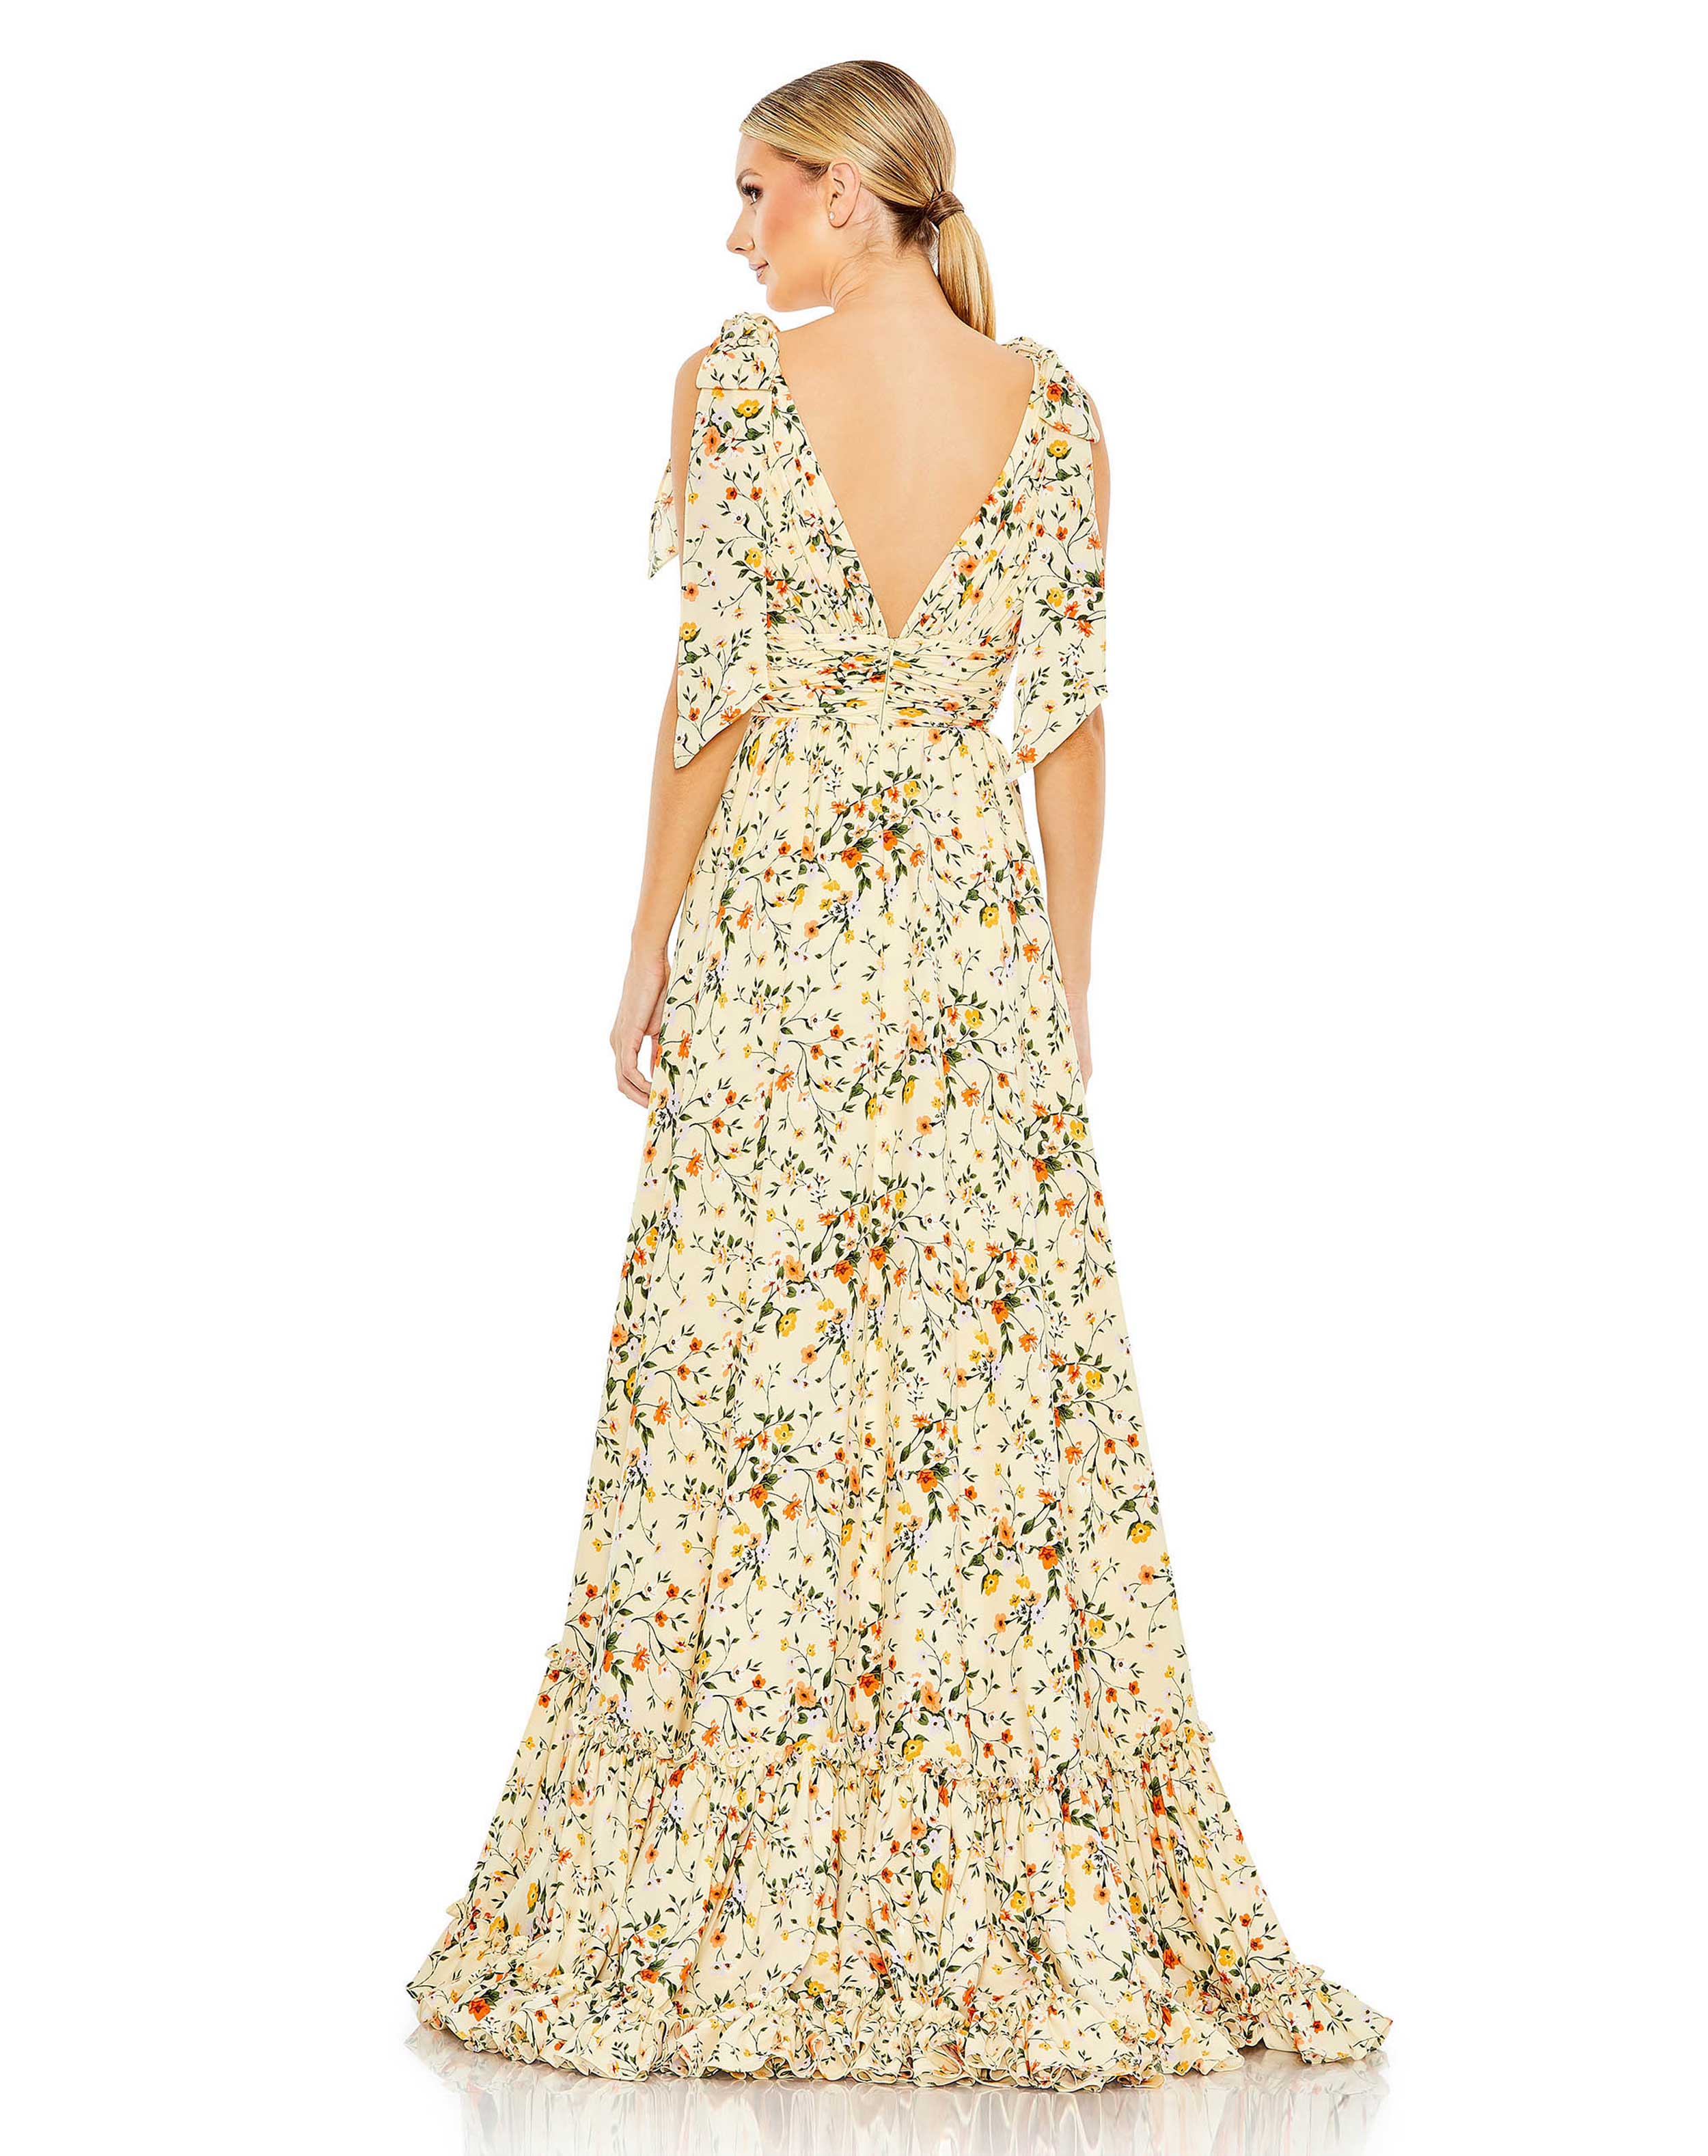 Rachel Parcell Floral Print Dress | Pink Chanel Flap Bag | Spring Dresses